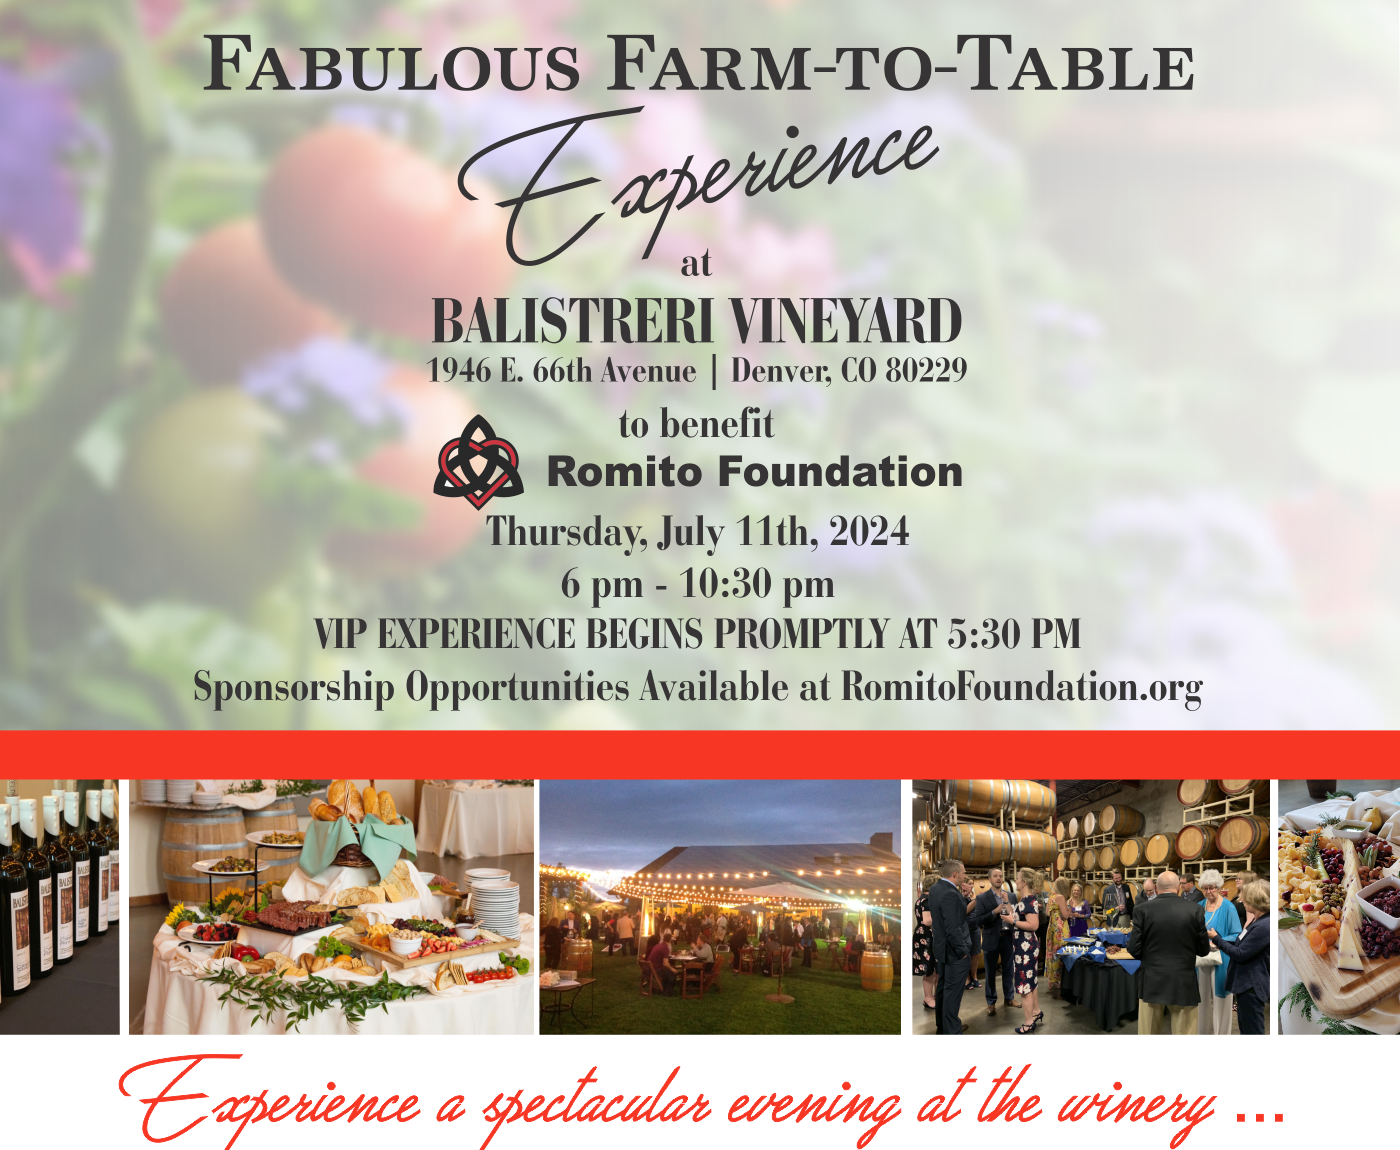 Fabulous Farm to Table Experience at Balistreri Vineyard Thursday, July 11th 1946 E 66th Ave., Denver, CO